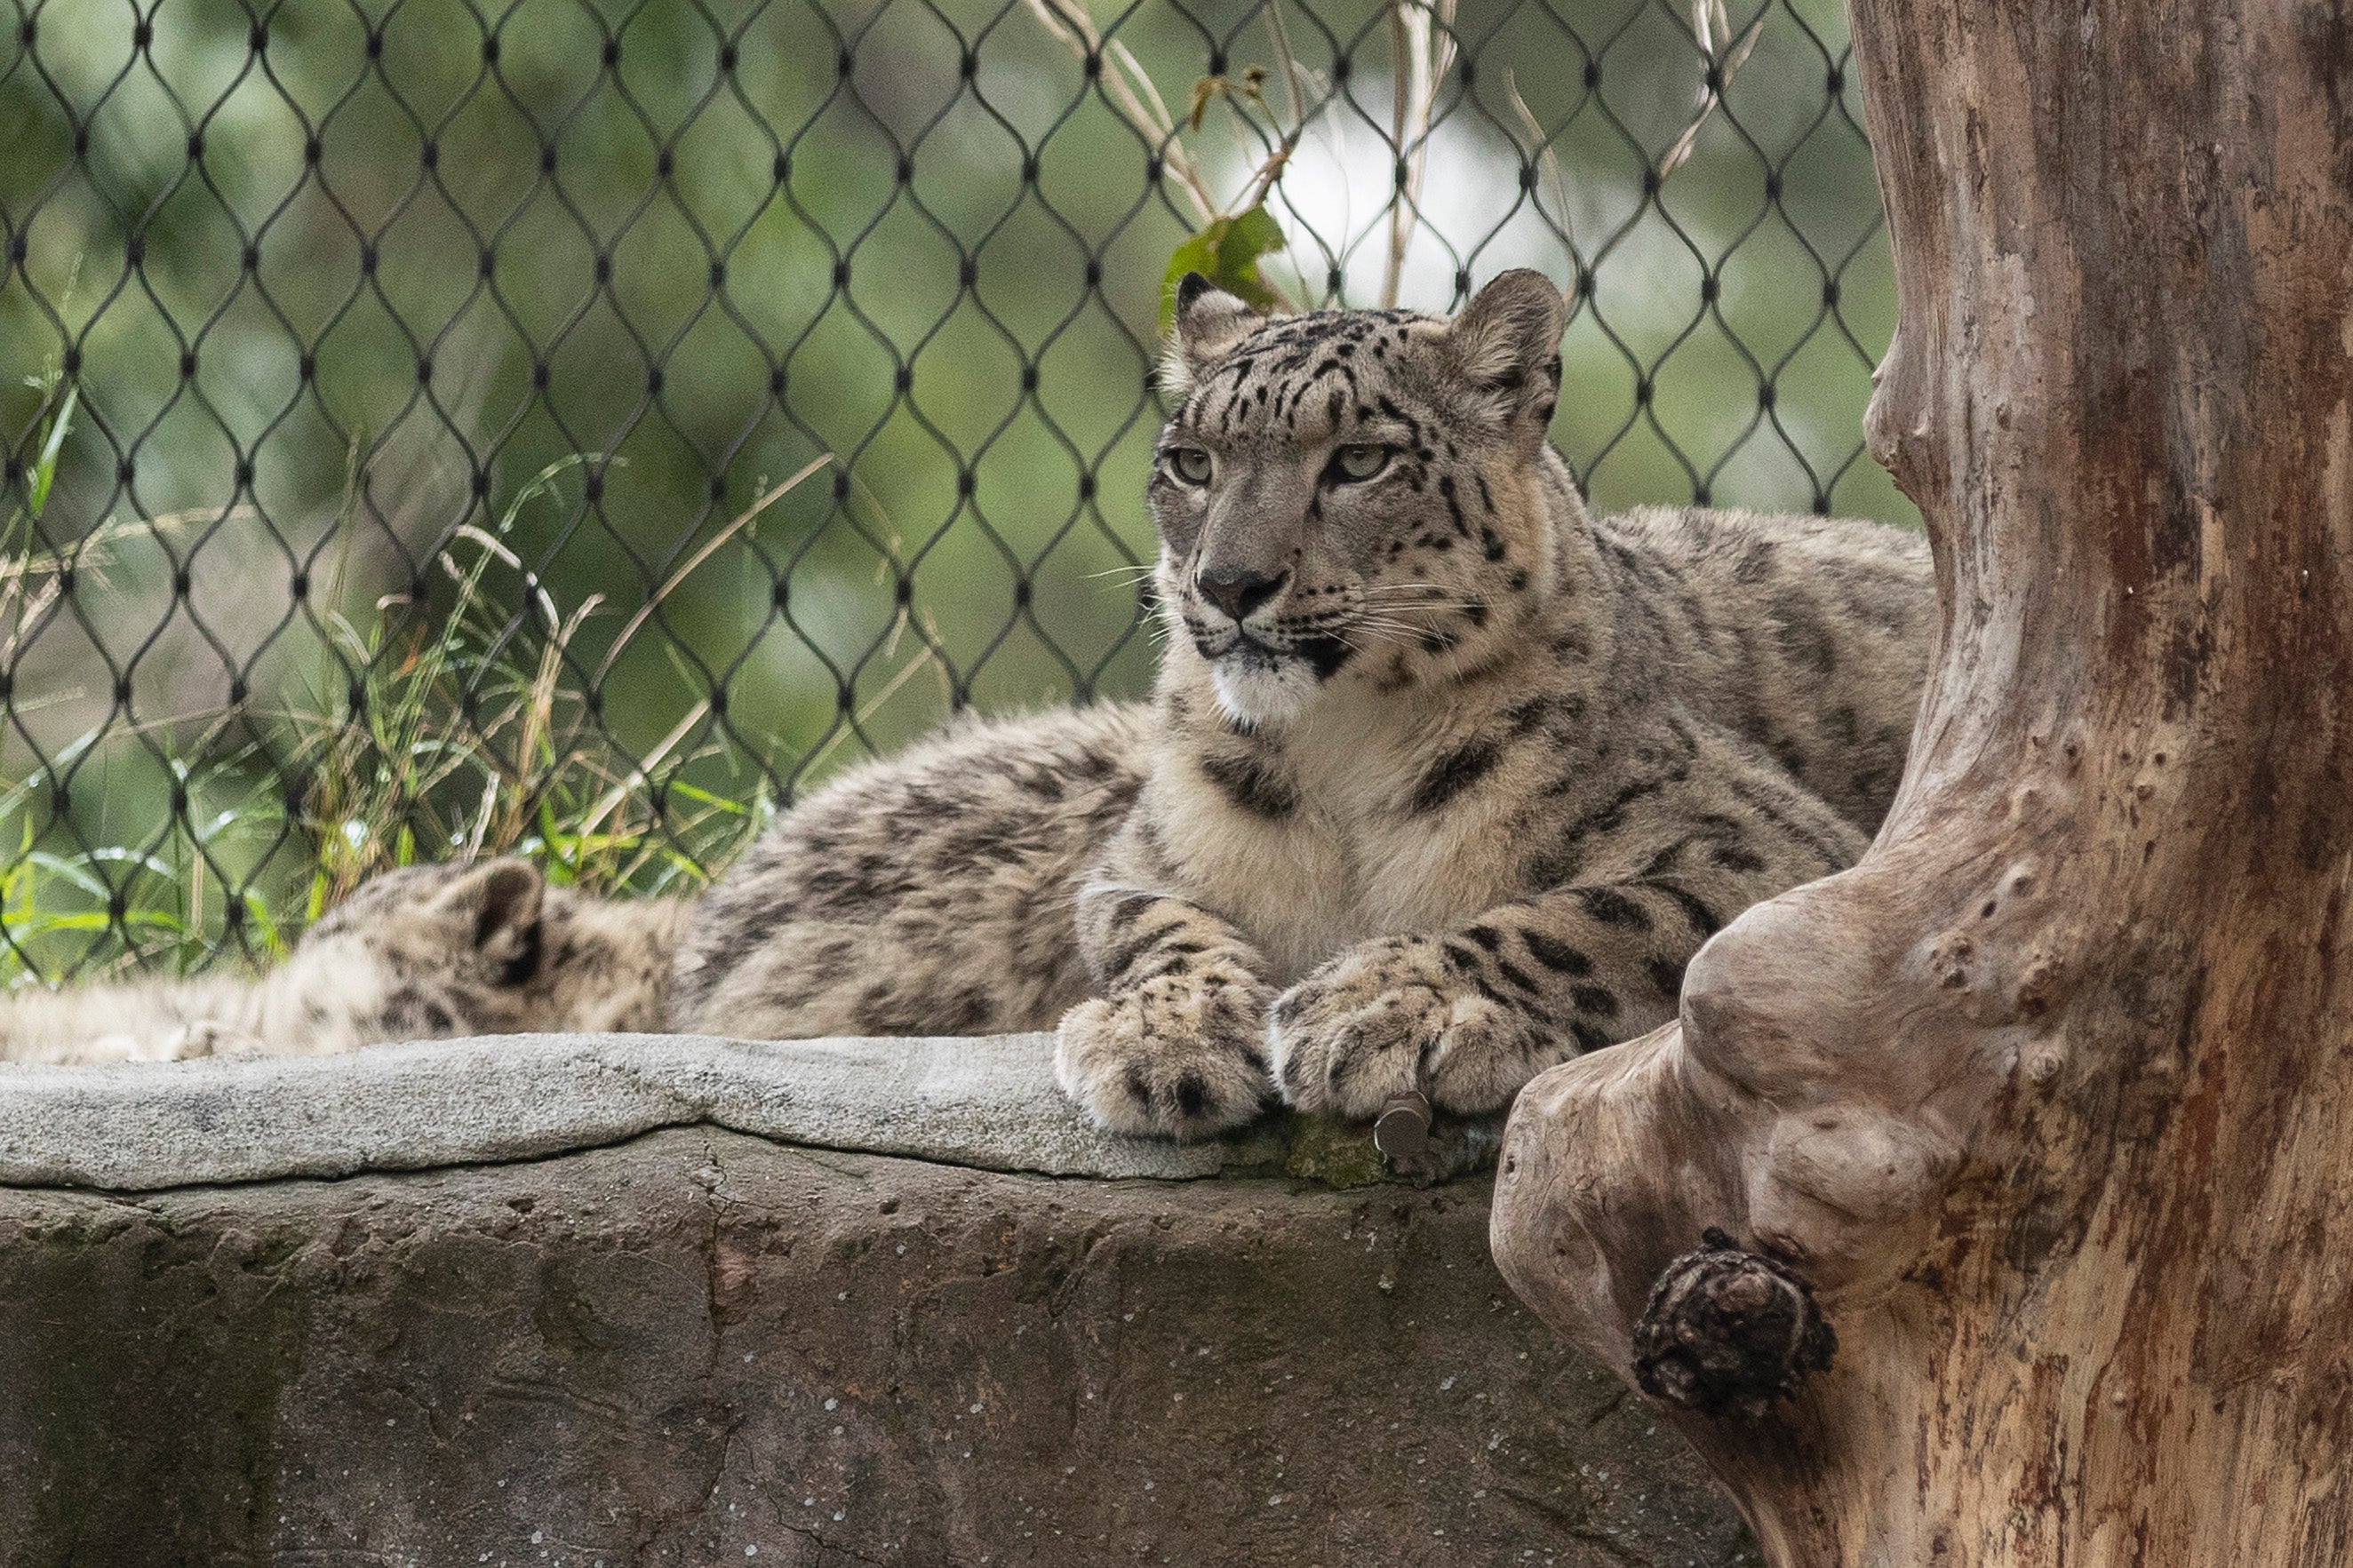 Snow leopard dies, five remaining big cats have COVID-19 symptoms